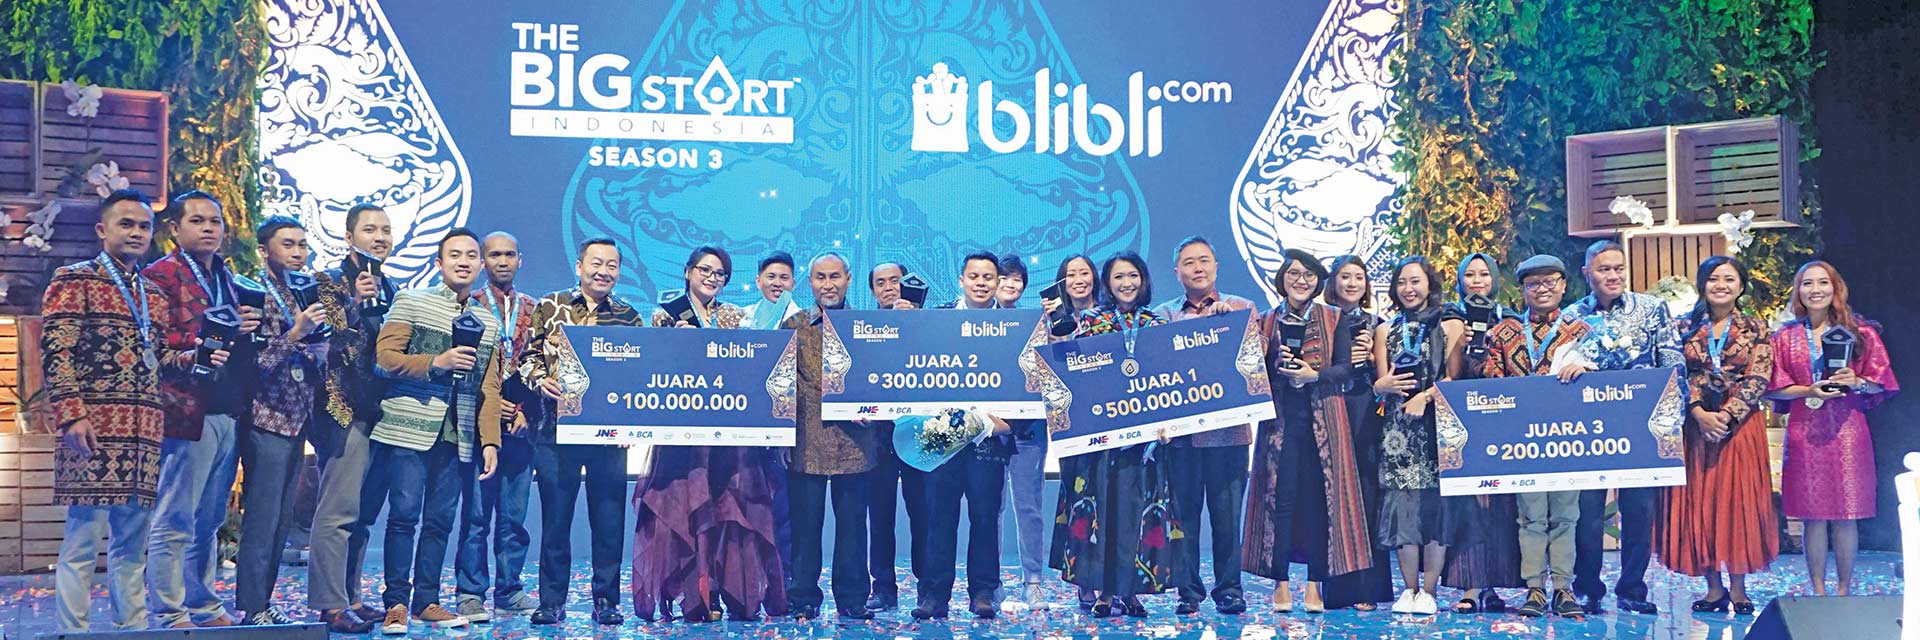 The Big Start Indonesia